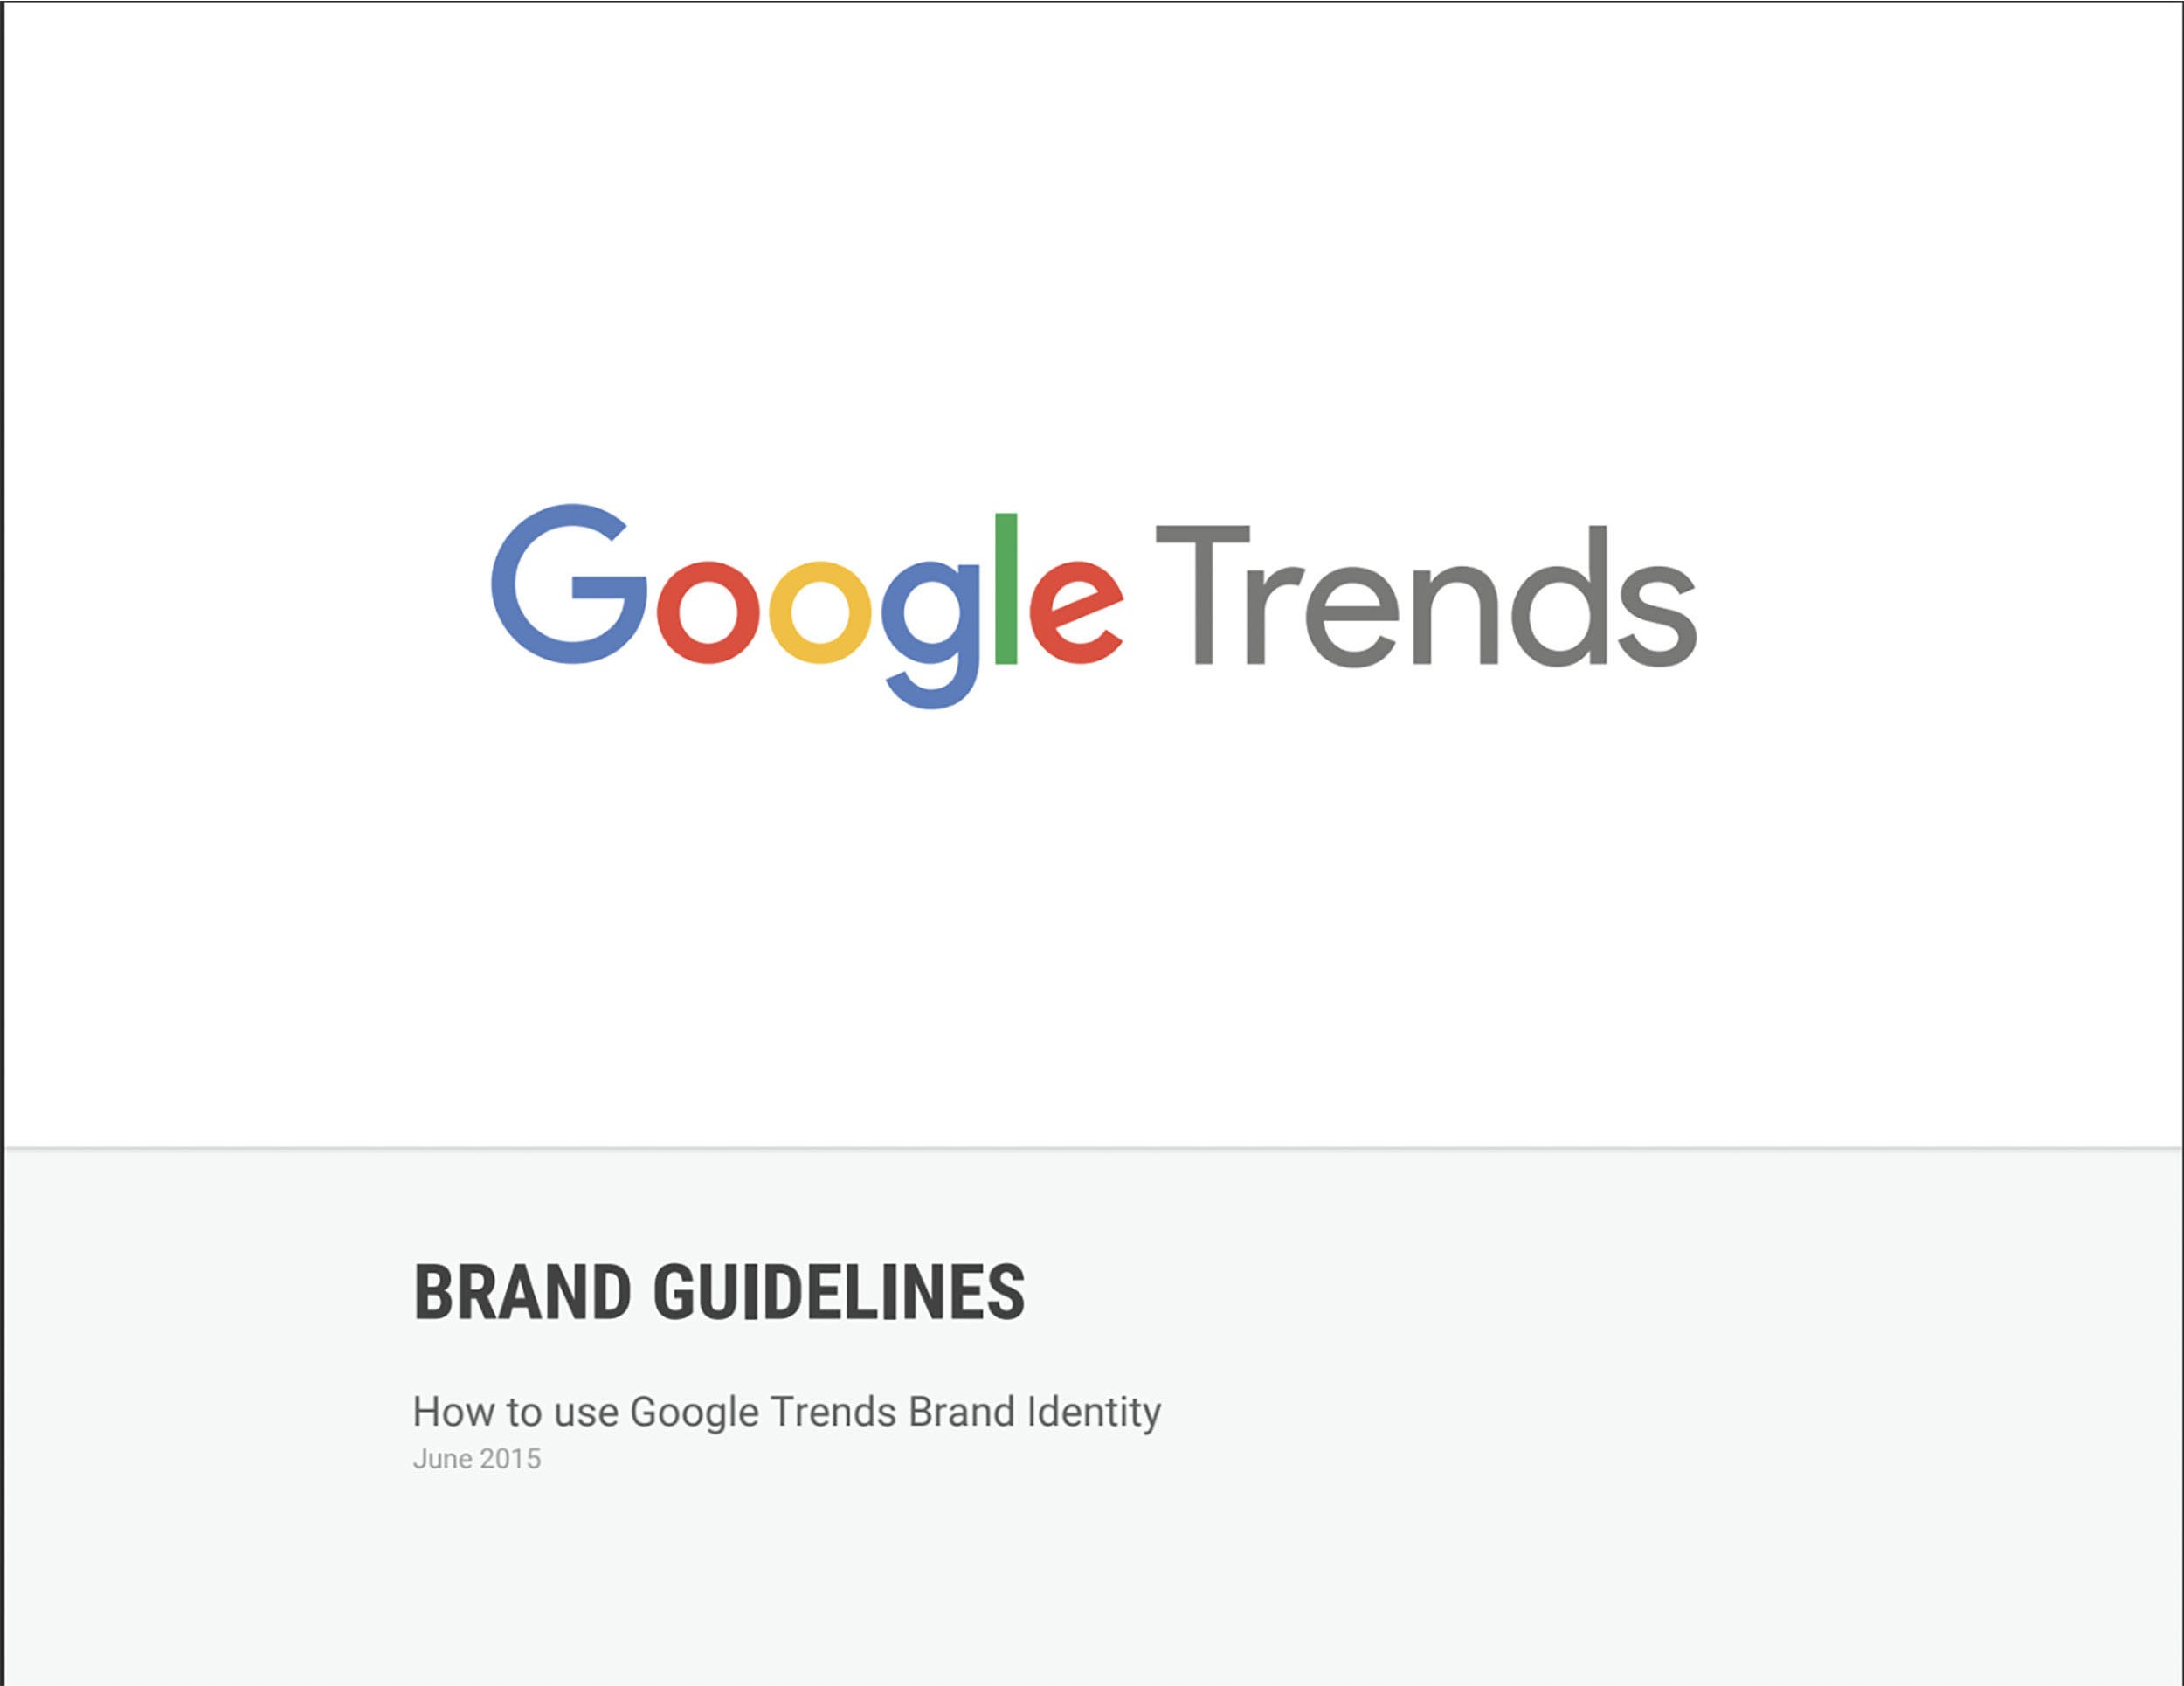 Google Trends brandbook